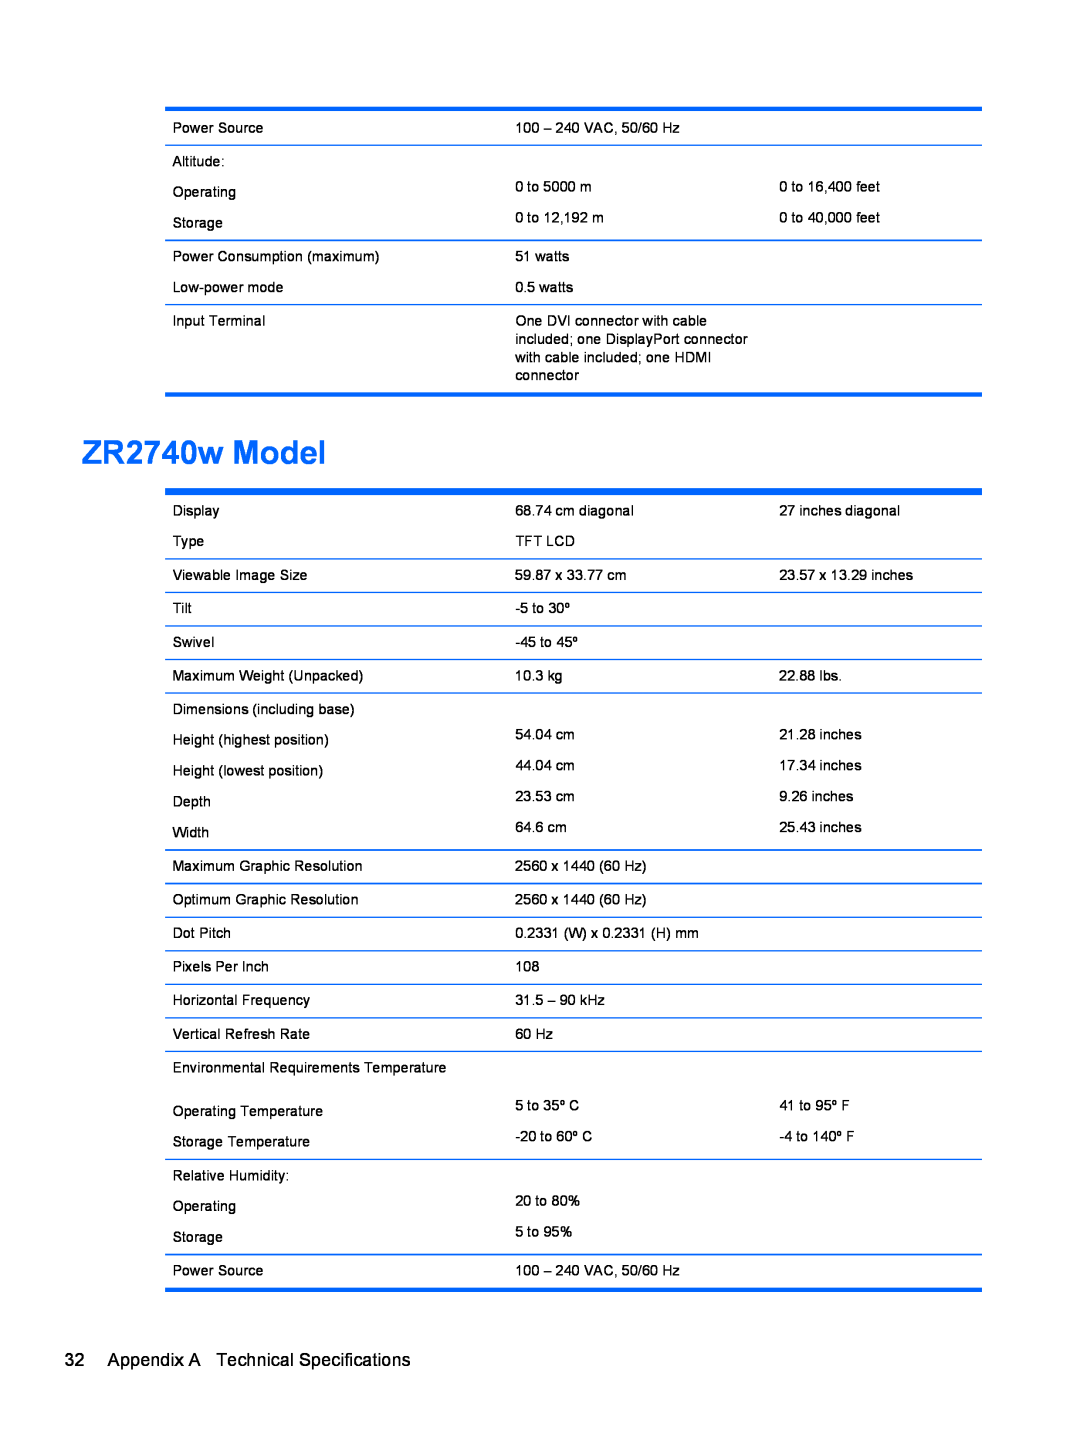 HP ZR2740w 27-inch IPS manual ZR2740w Model, Appendix A Technical Specifications 